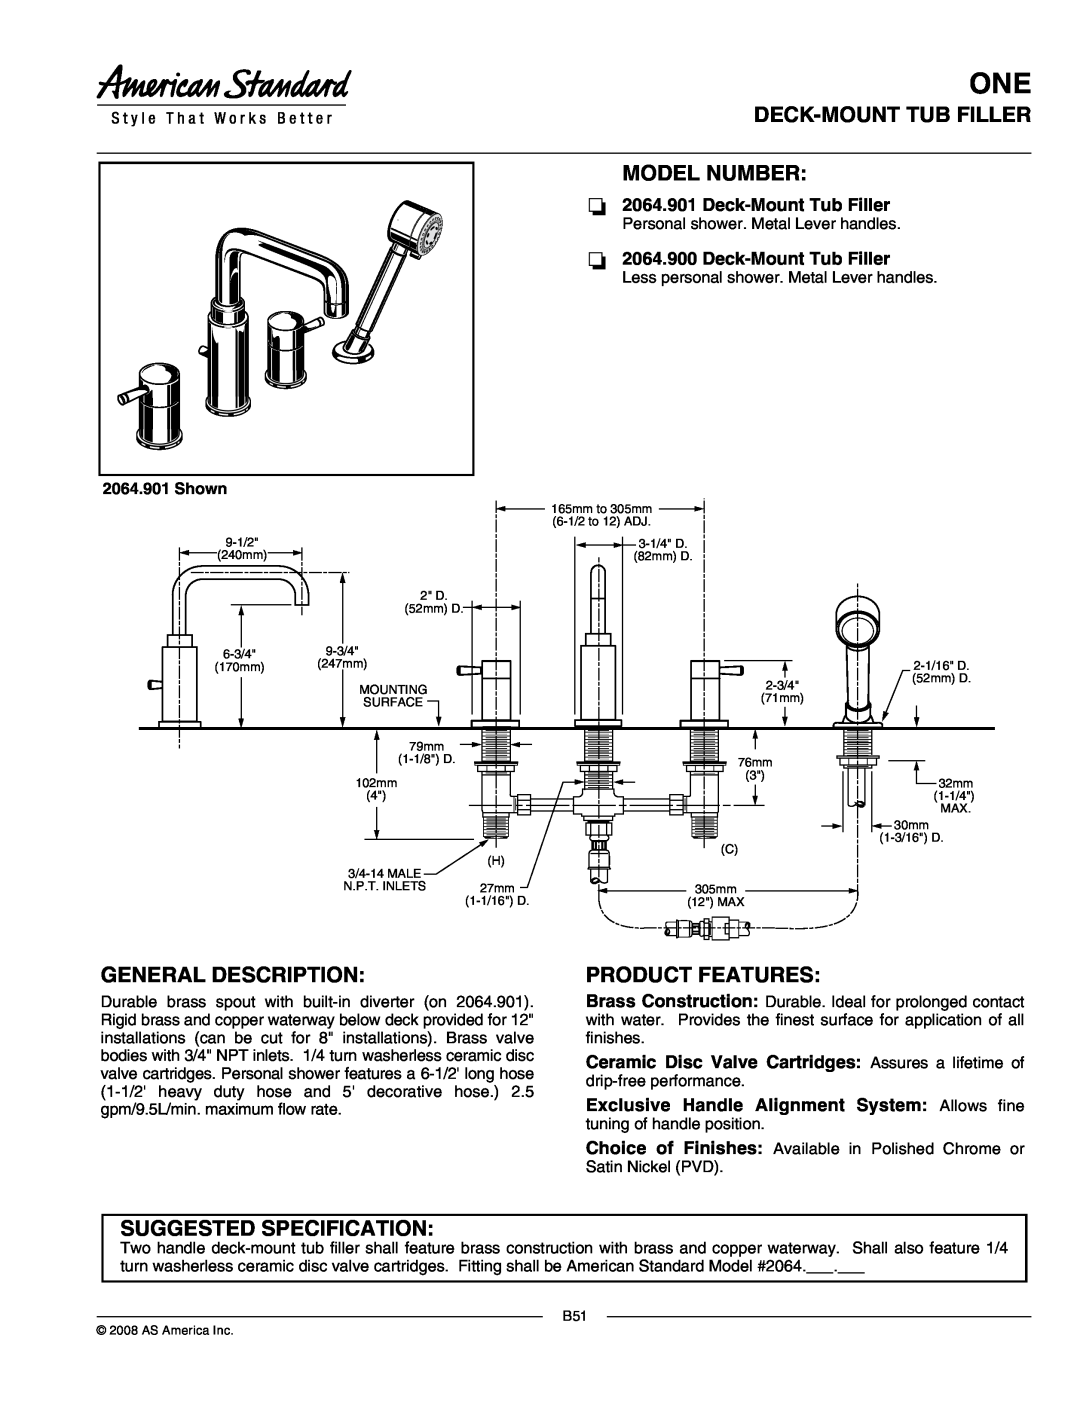 American Standard 2064.900 manual Deck-Mounttub Filler Model Number, General Description, Product Features, Shown 